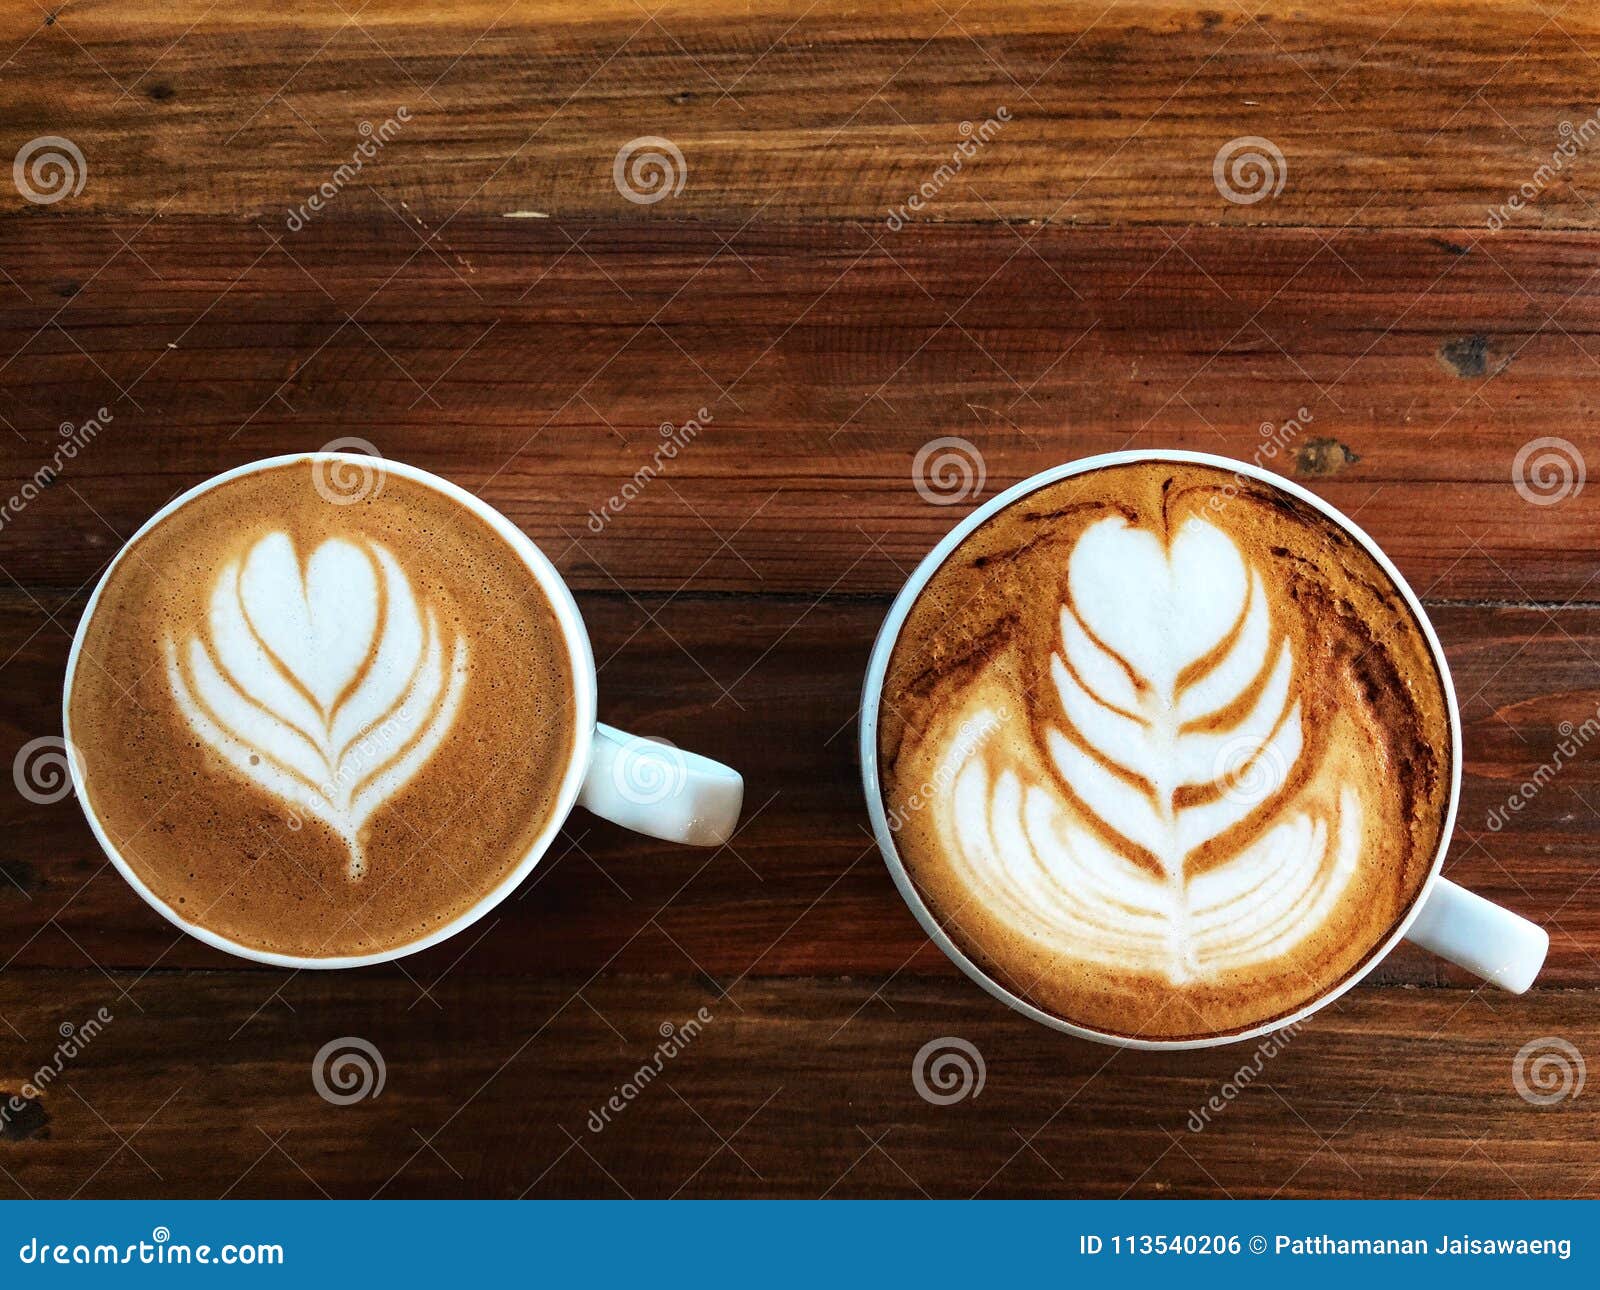 piccolo latte art coffee and cappuccino coffee in white cup